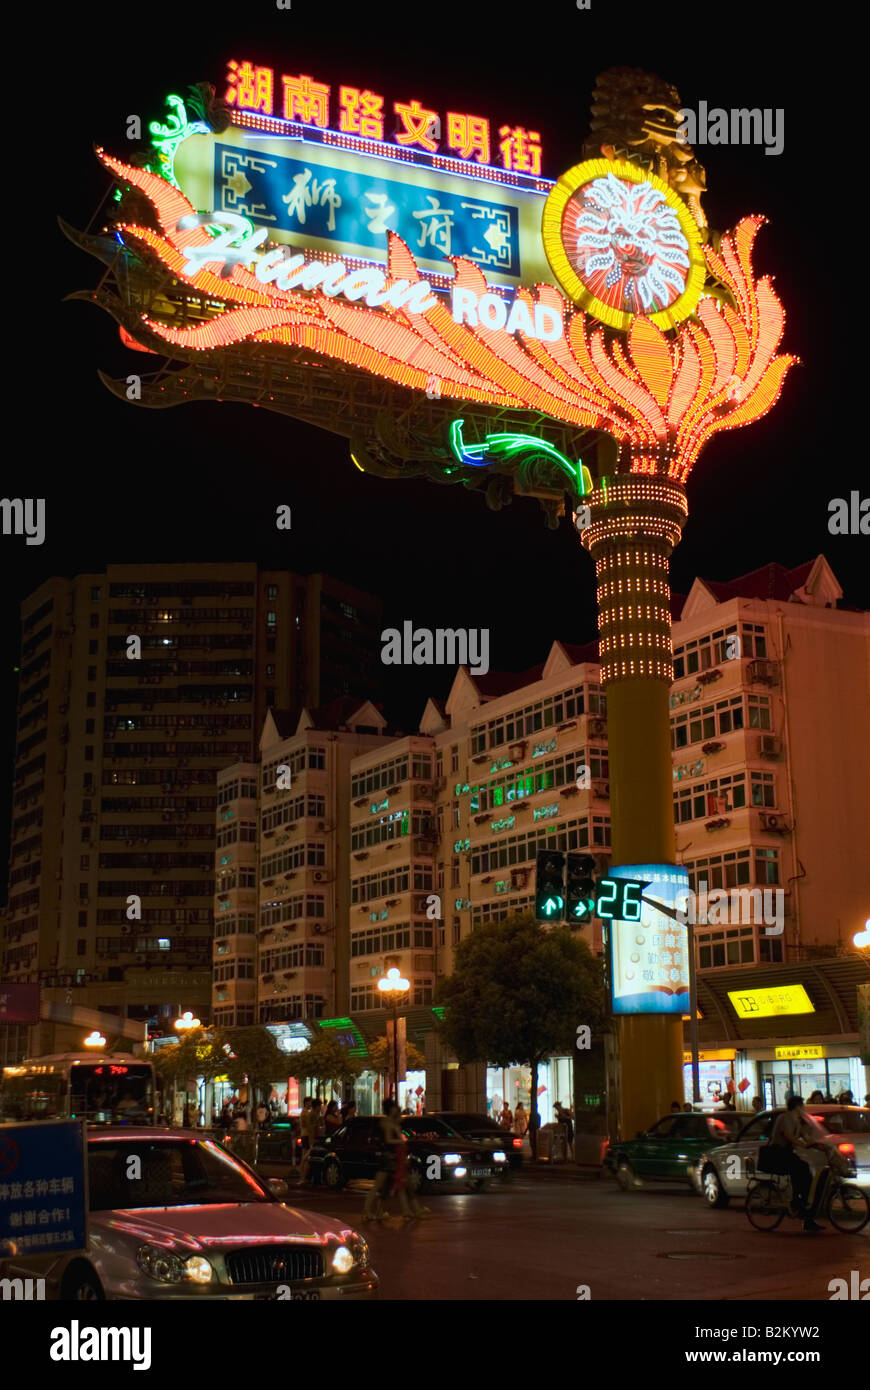 China, Nanjing, Neon lit street sign at entrance of Hunan Road pedestrian area at night Stock Photo